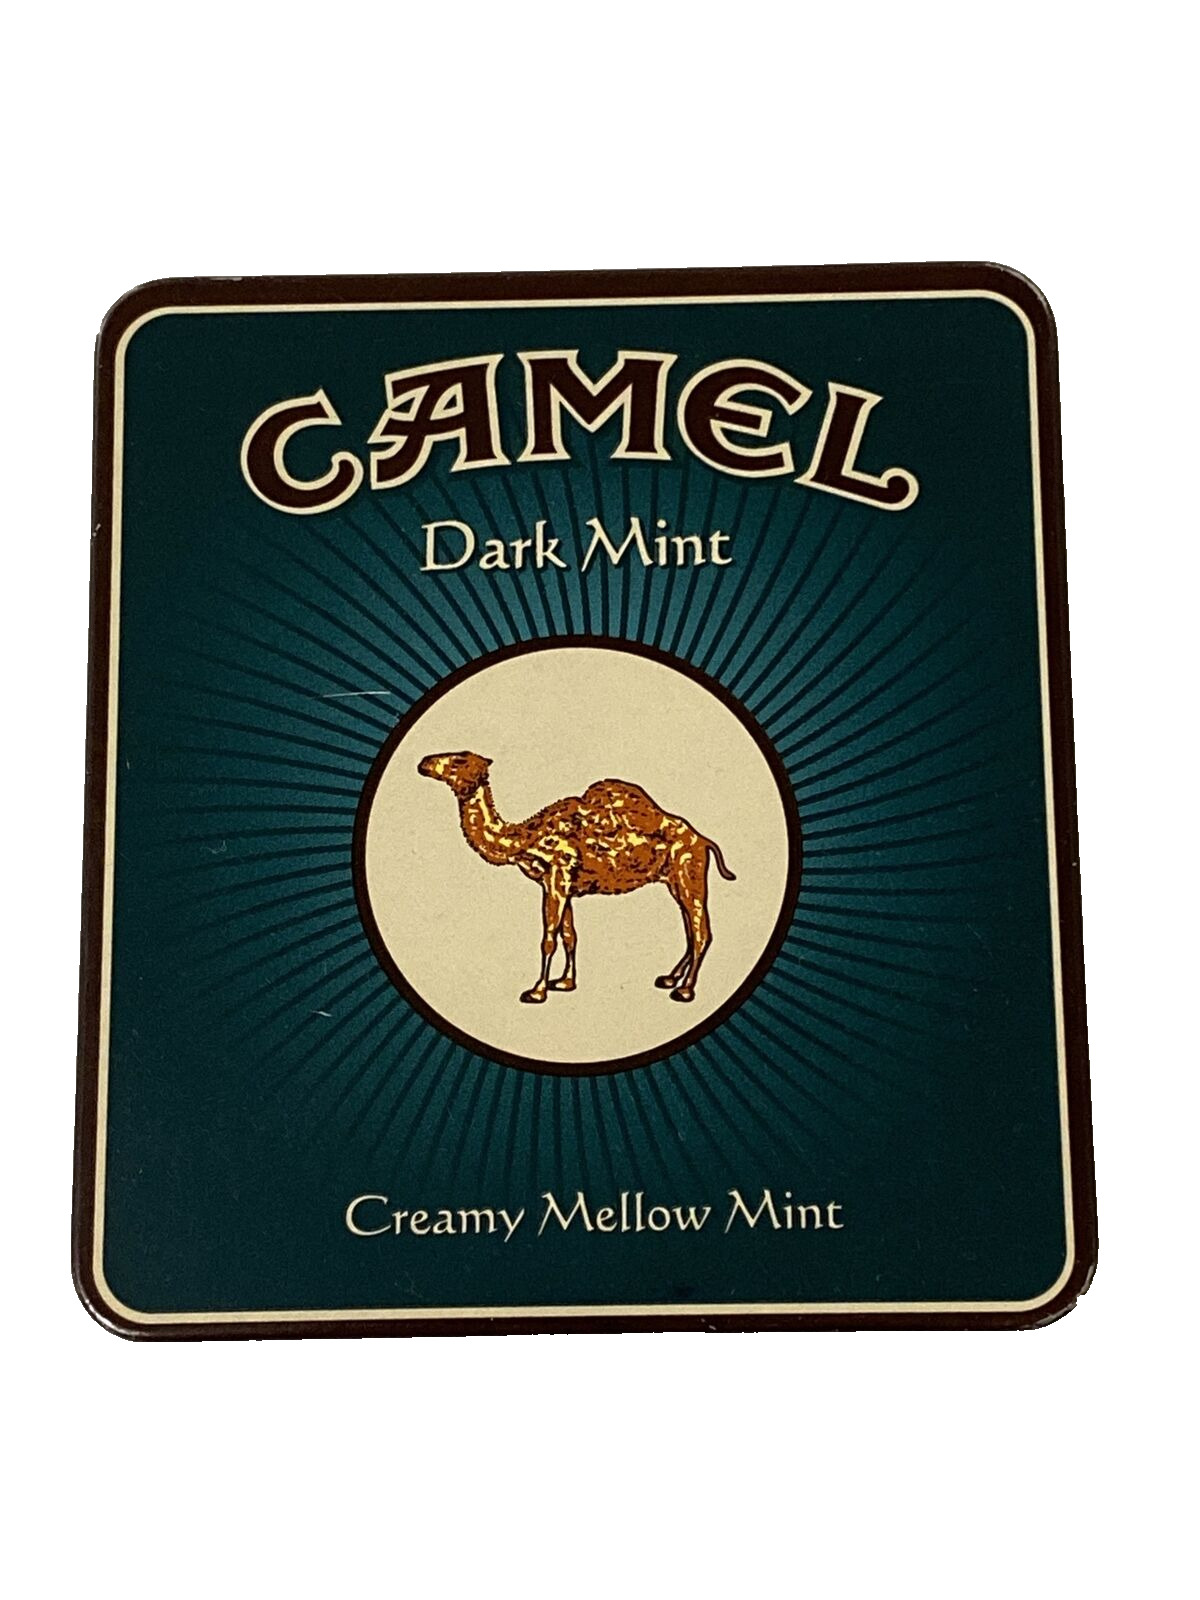 Vintage Camel Tin Dark Mint Cigarettes Creamy Mellow Mint Collectable Empty